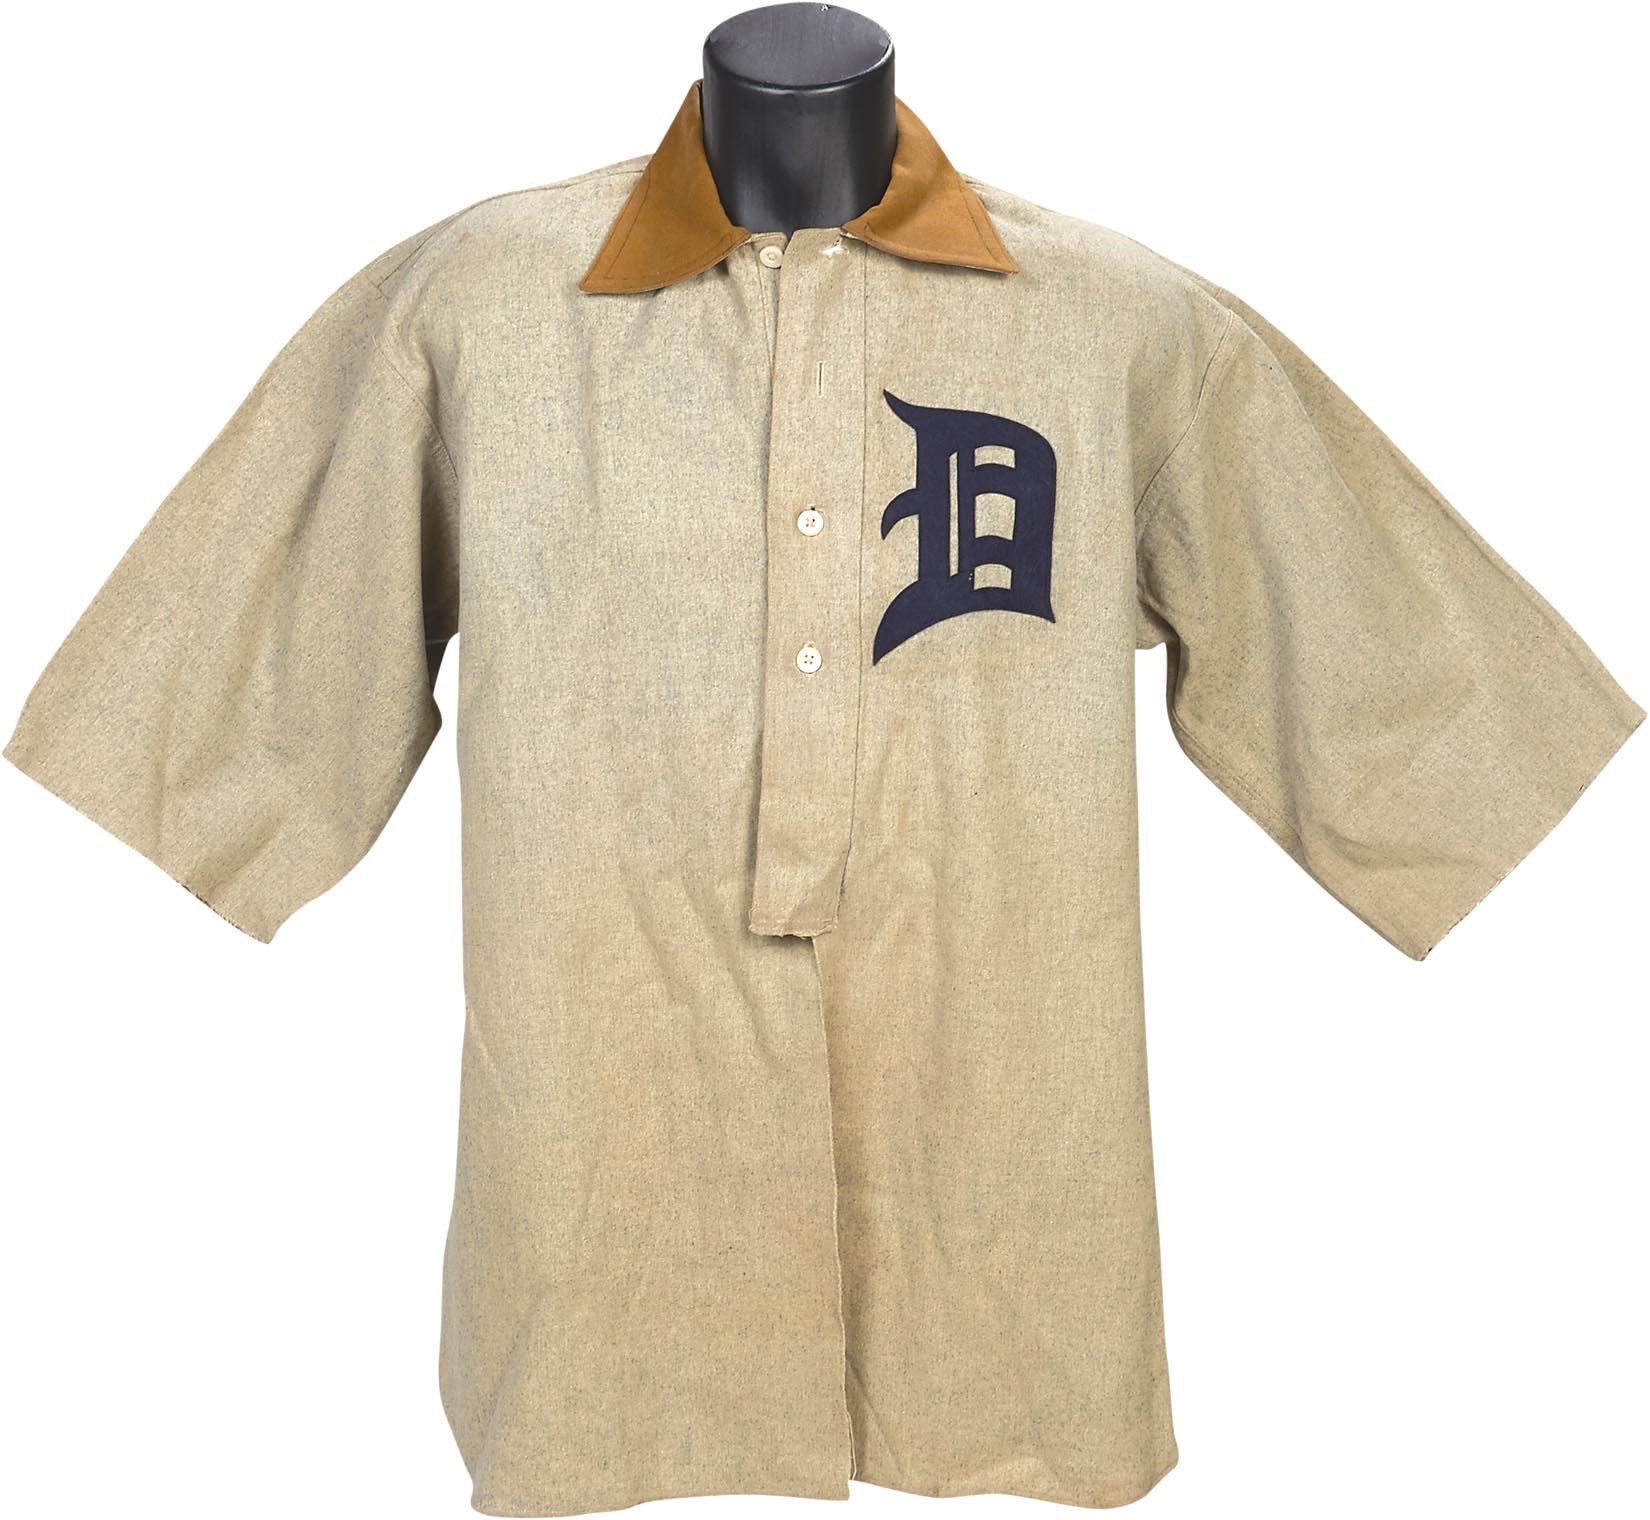 Circa 1907 Bobby Lowe Detroit Tigers Game Worn Jersey